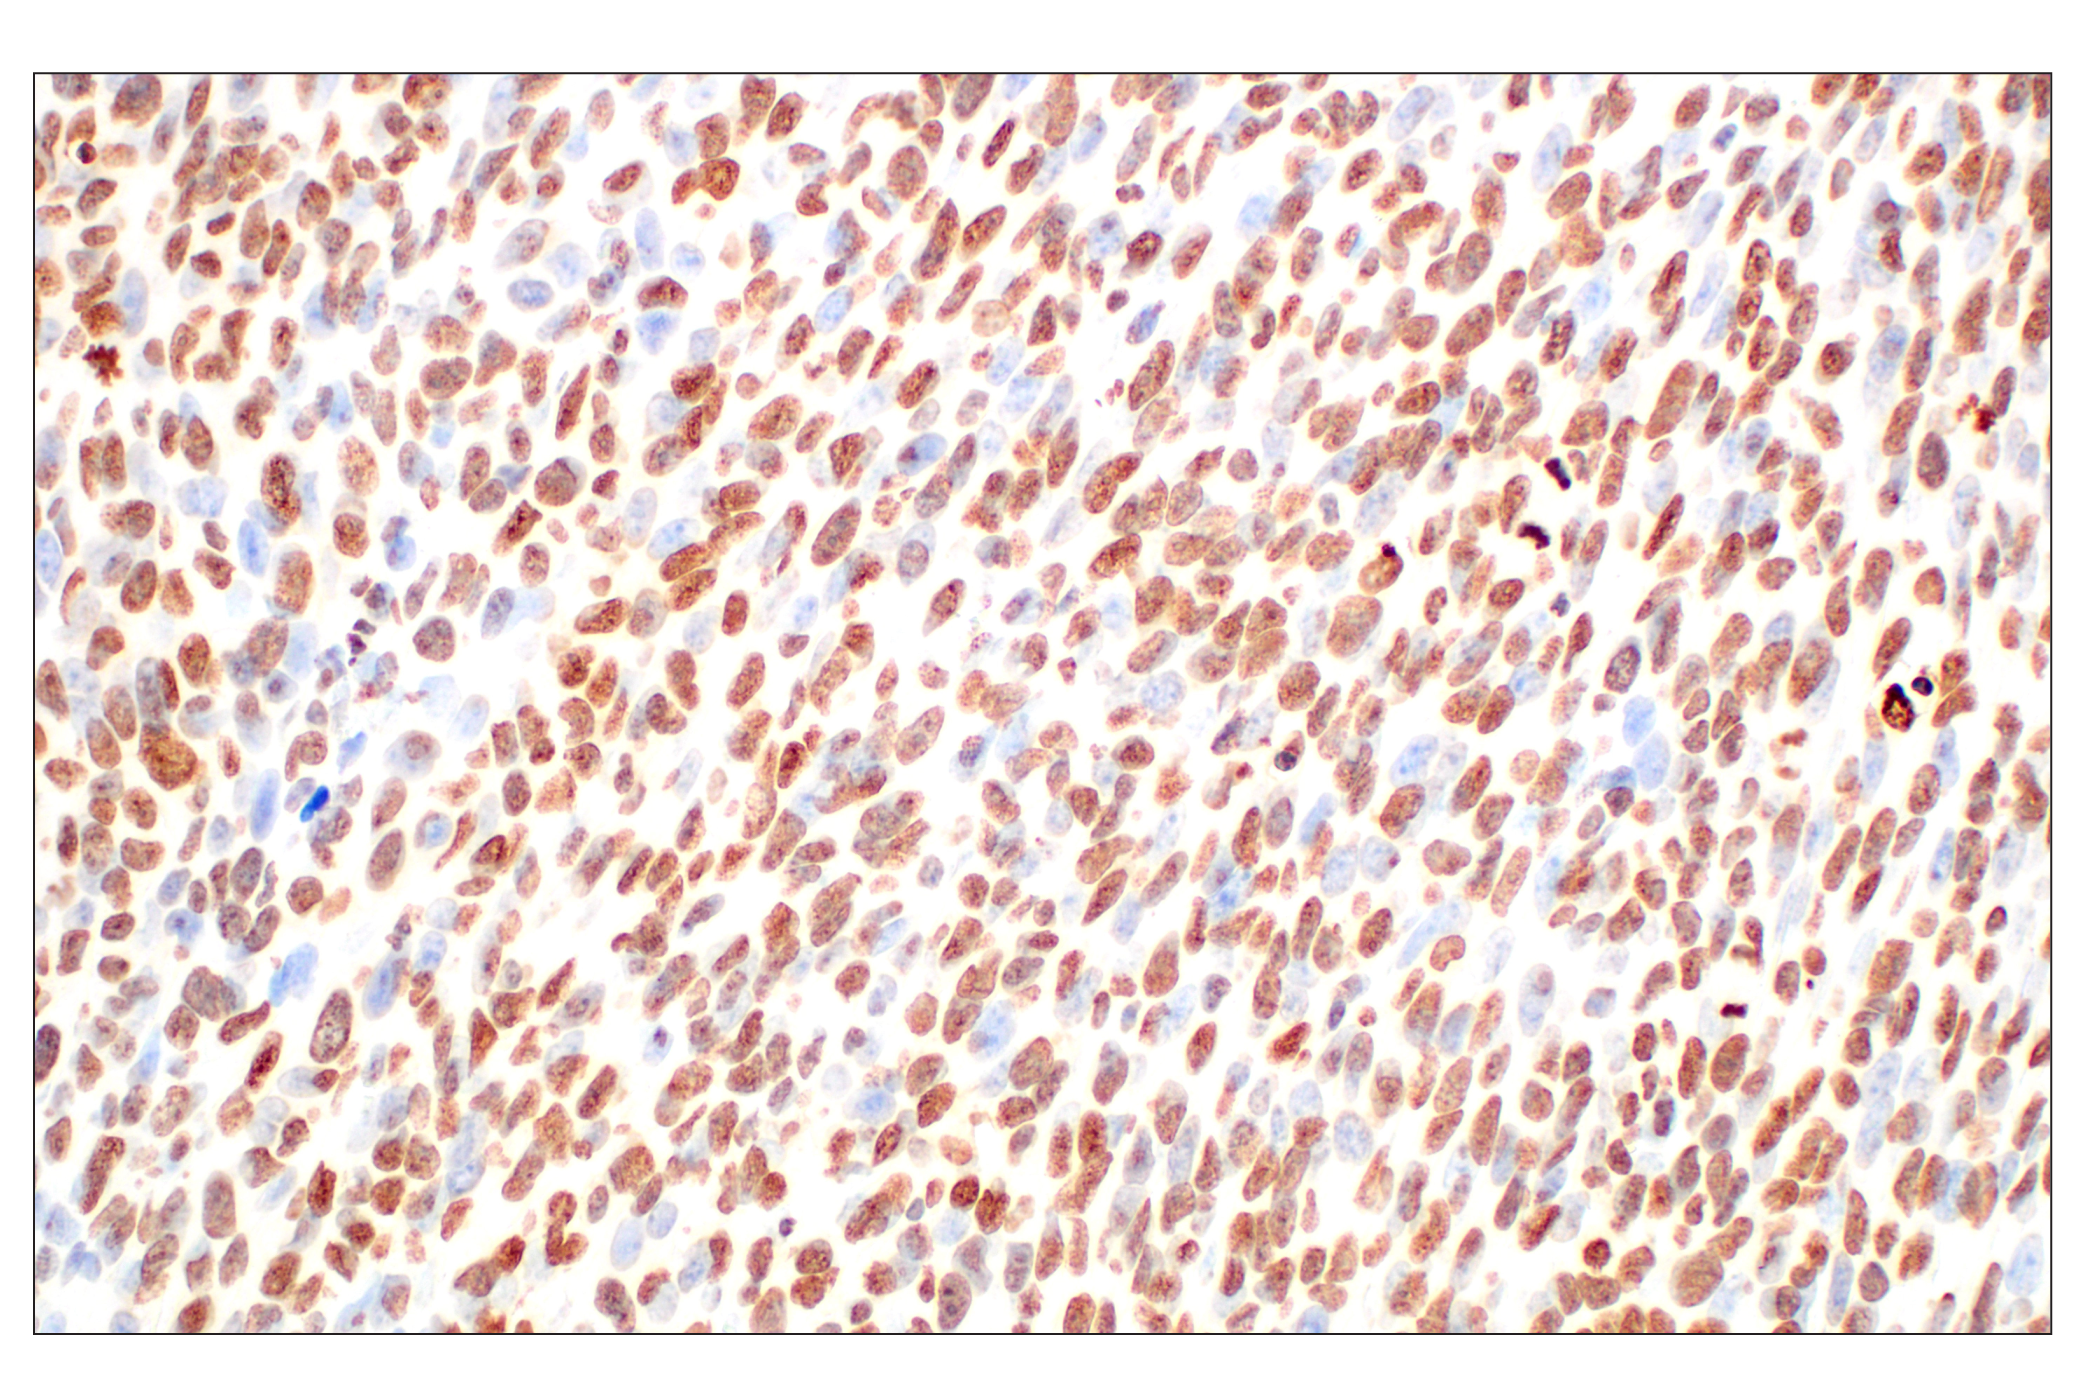  Image 15: Acetyl-Histone H3 Antibody Sampler Kit